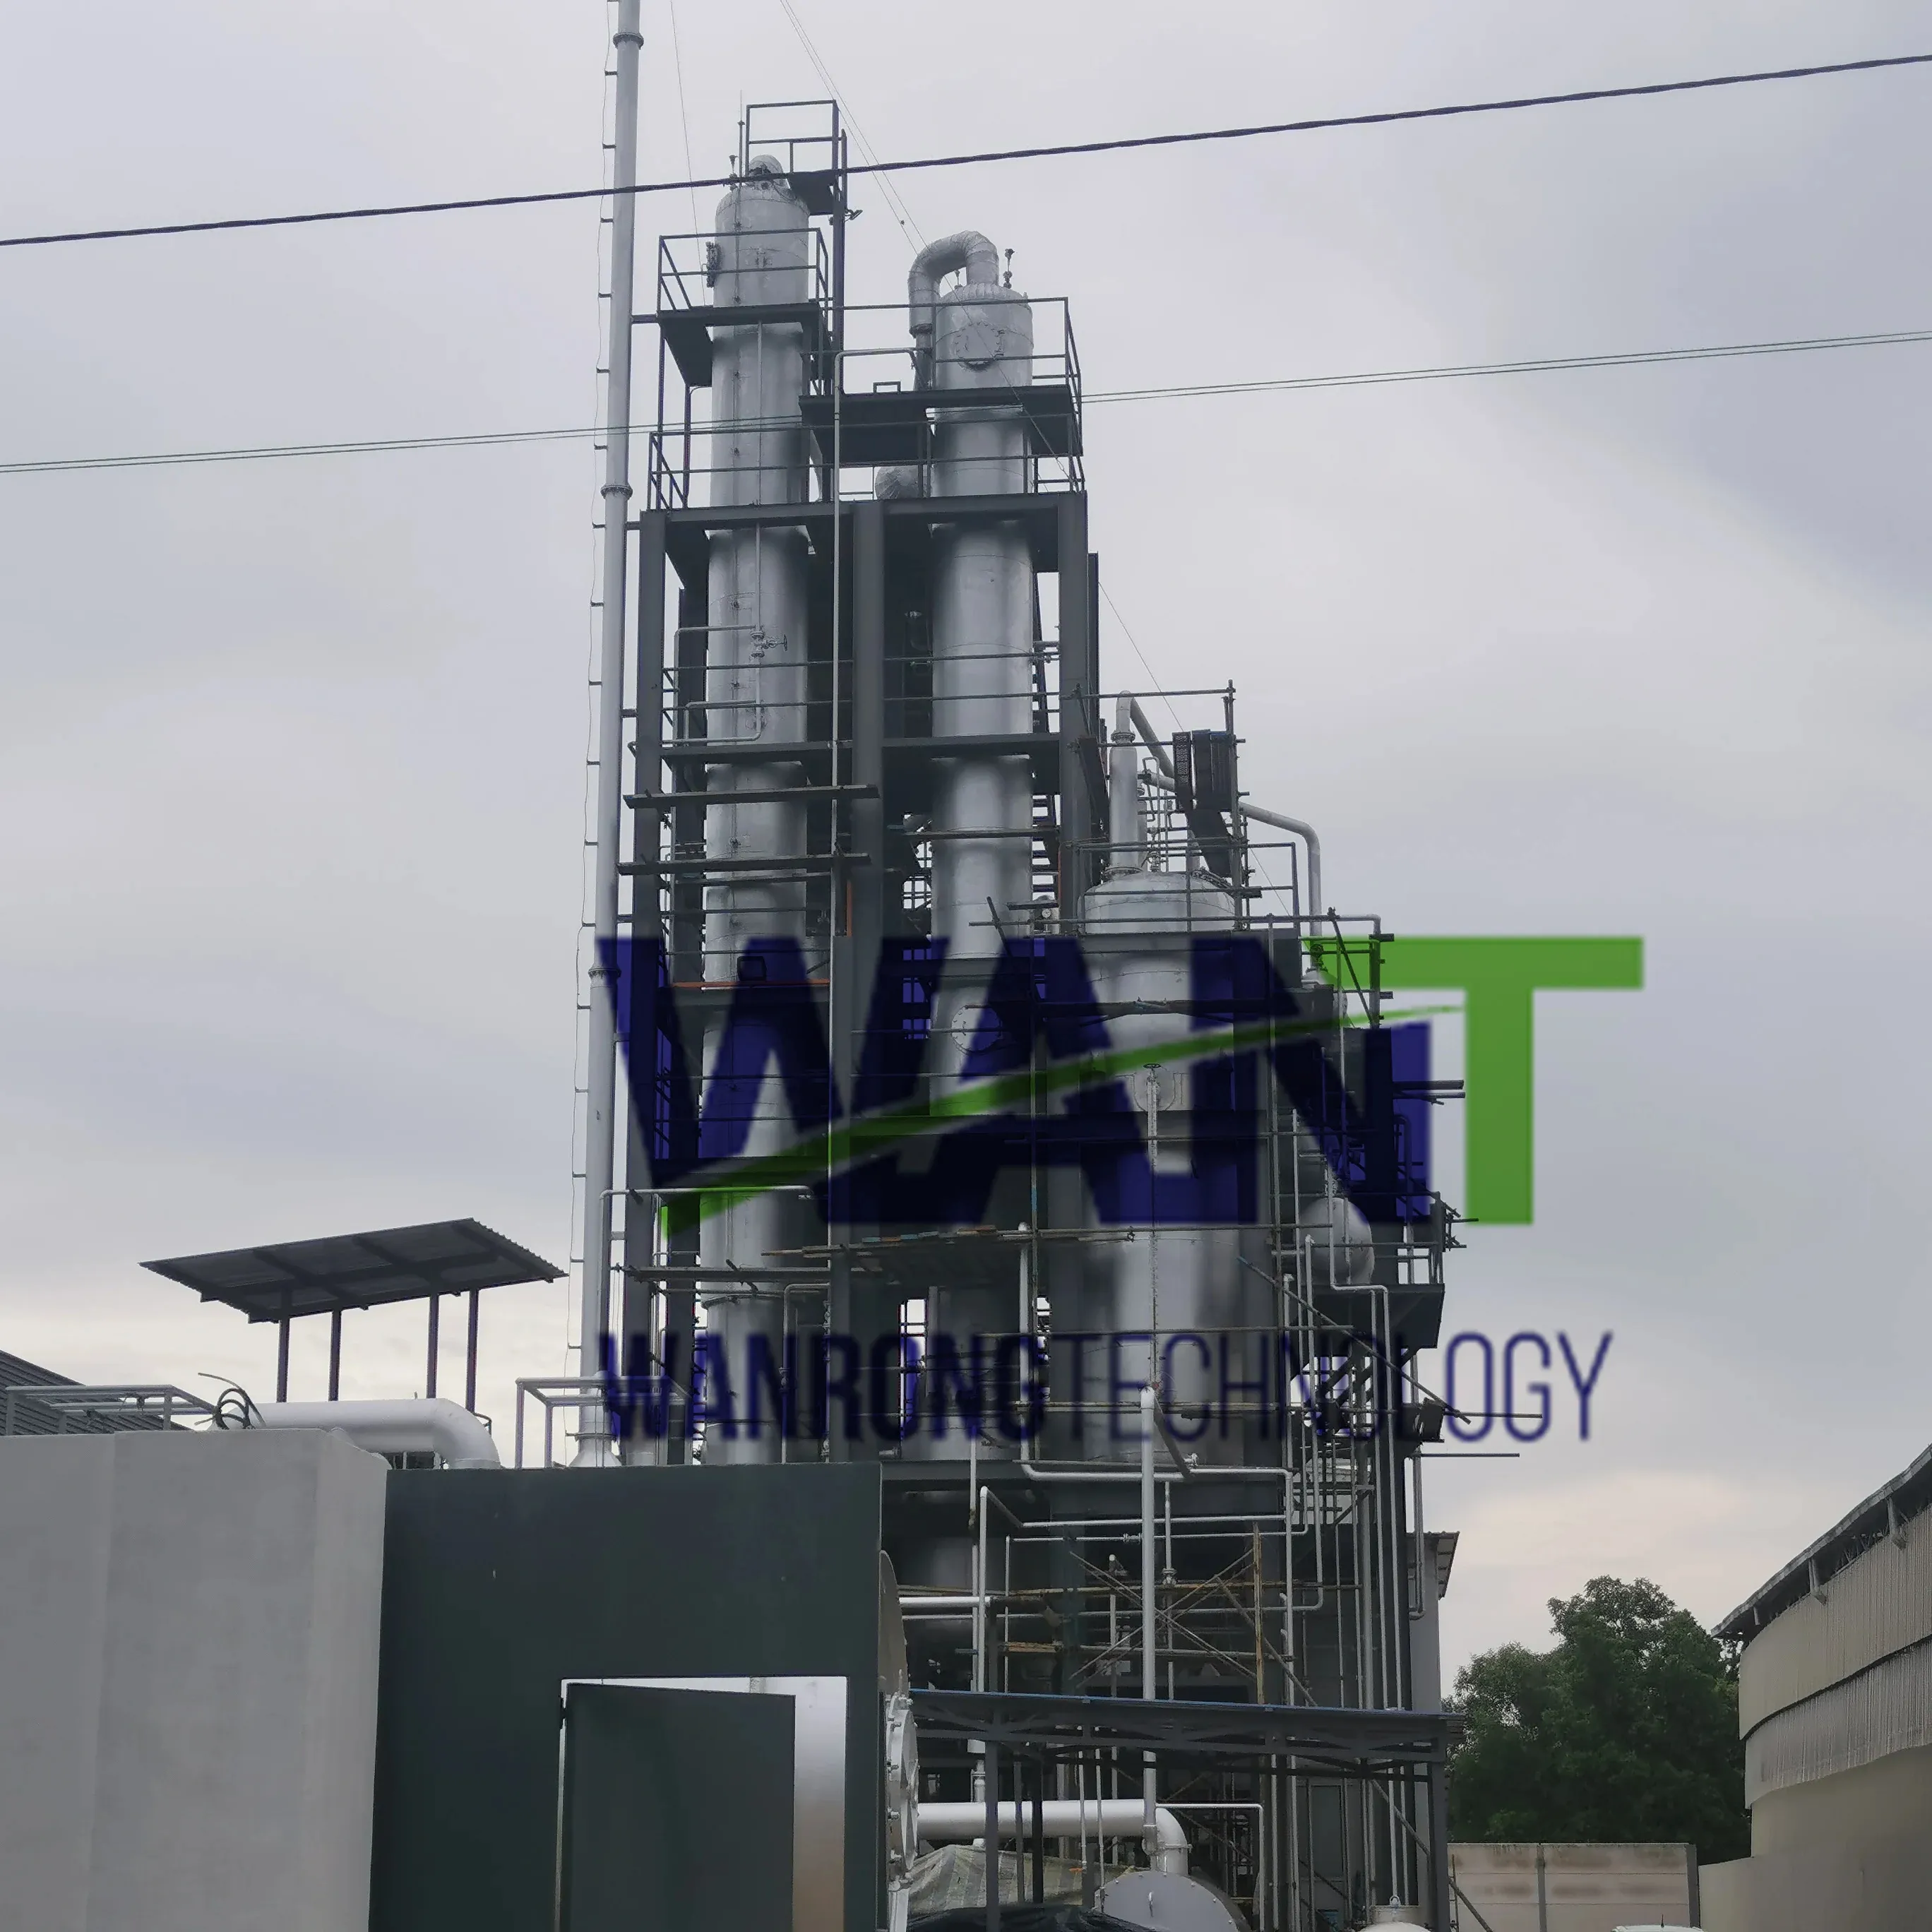 Wanrong特許製品廃エンジンオイル中古オイルリサイクルディーゼルおよびベースオイル蒸留装置